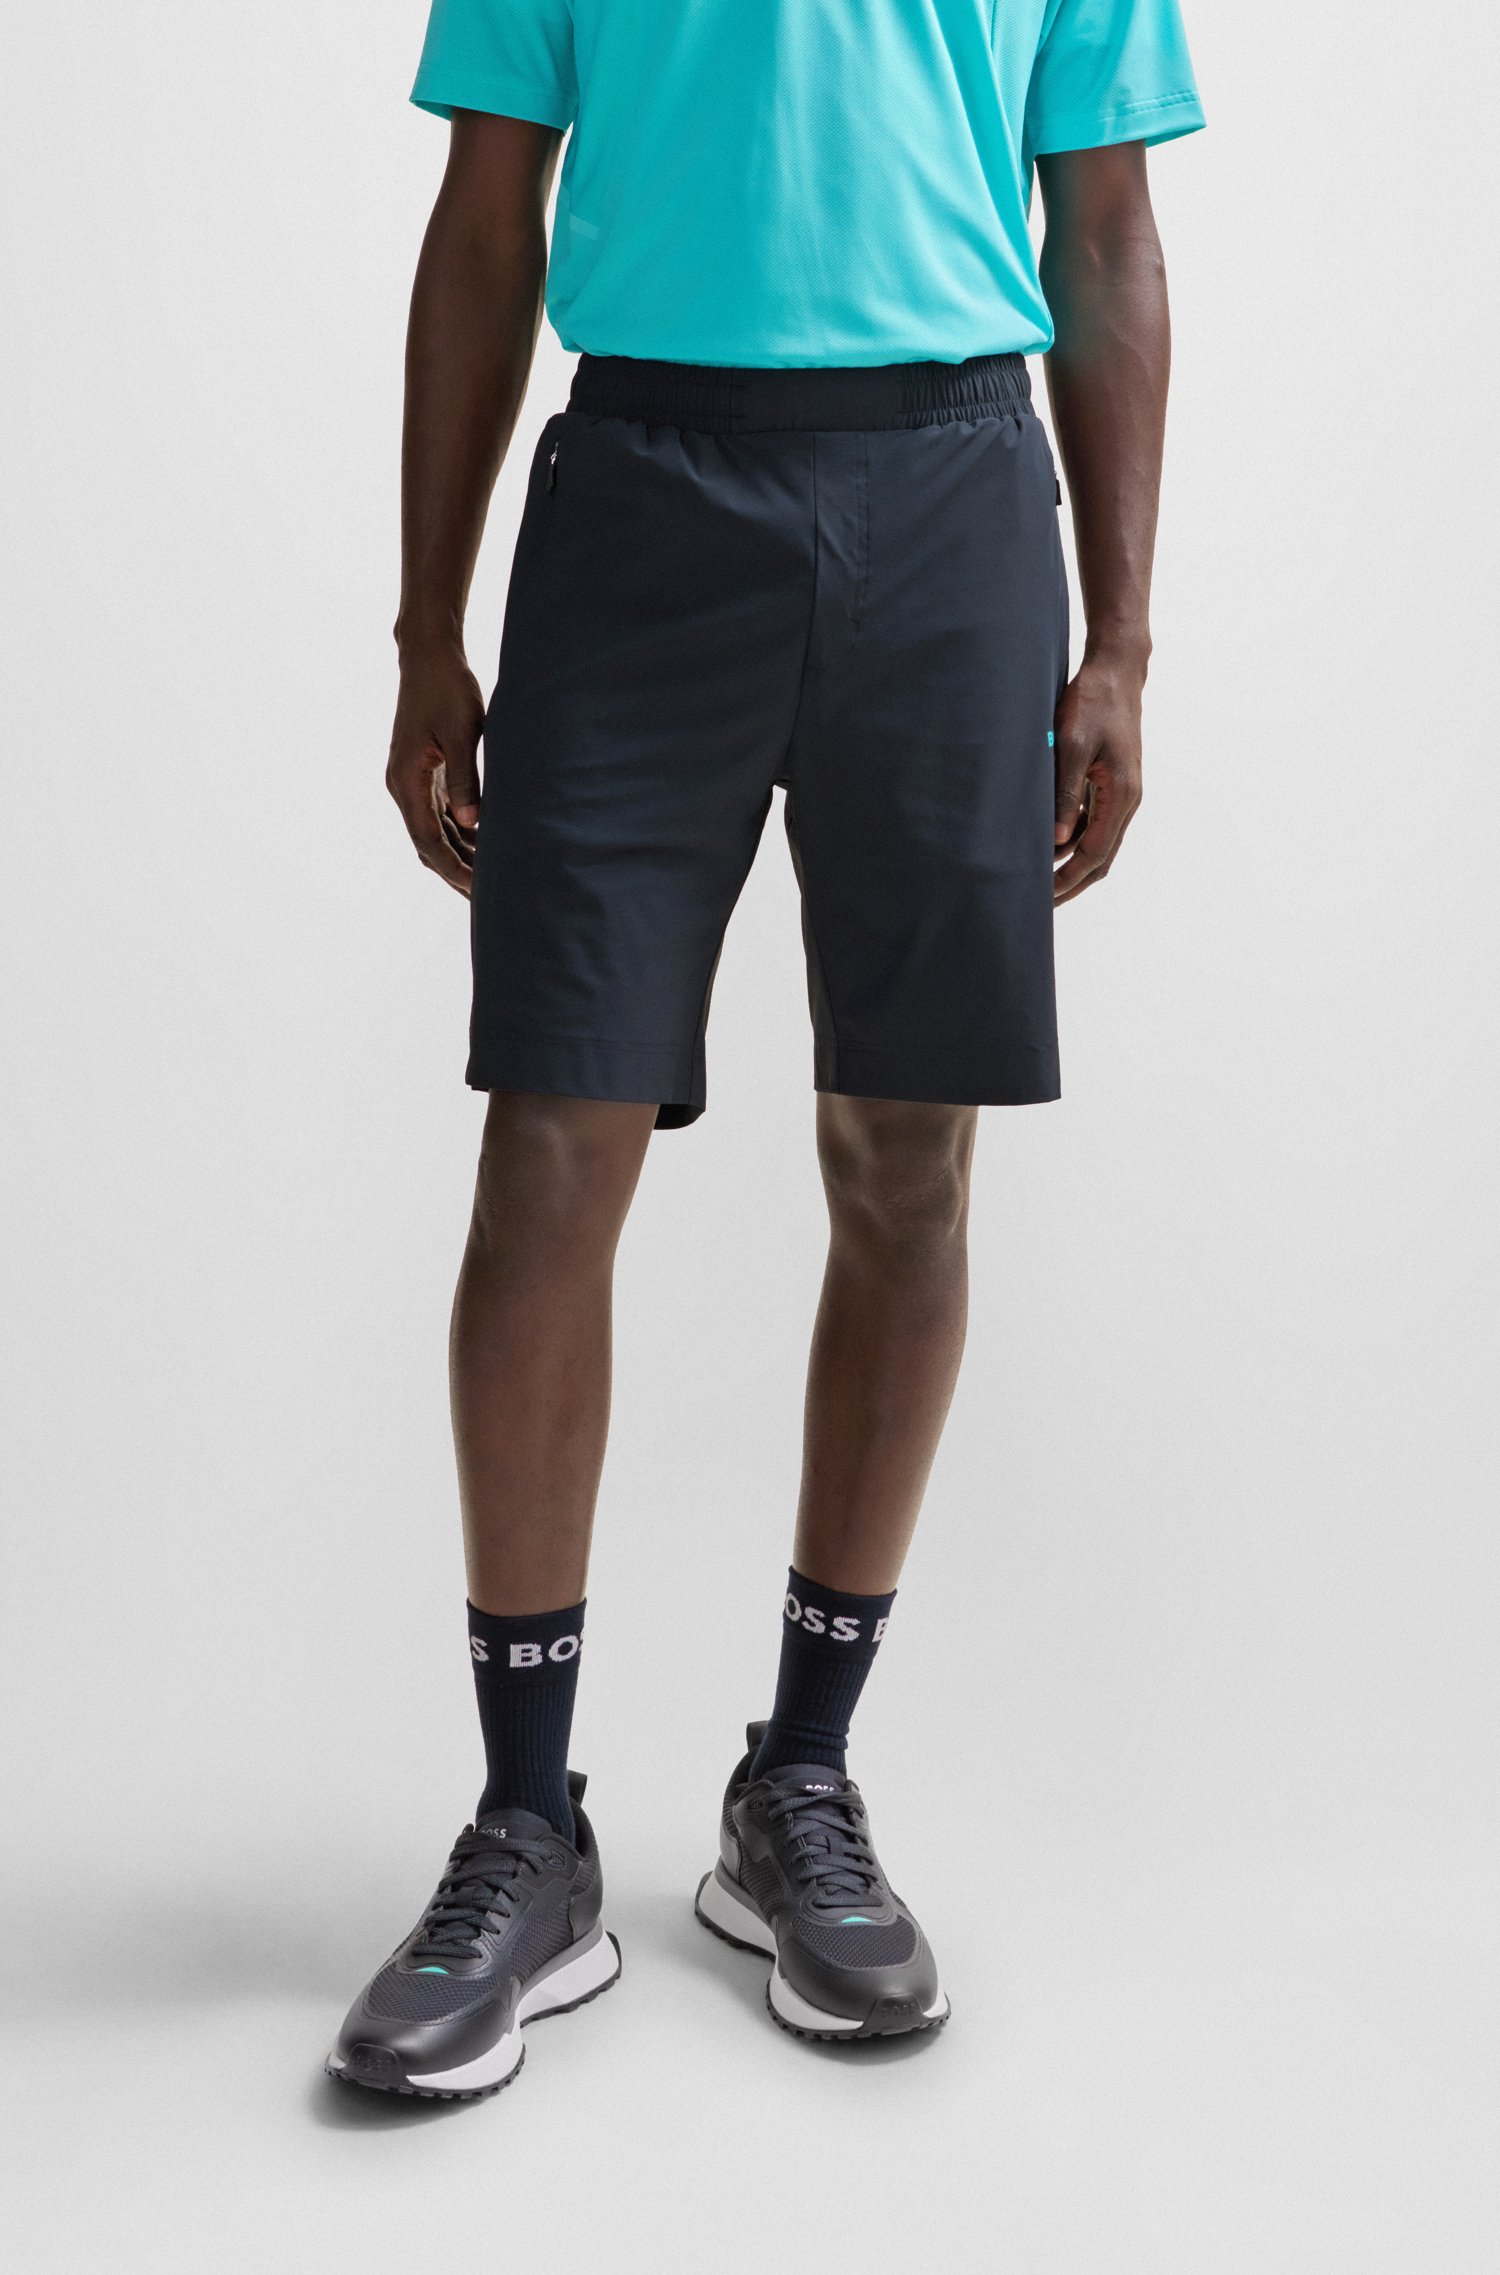 Shorts regular fit con diseño reflectante decorativo